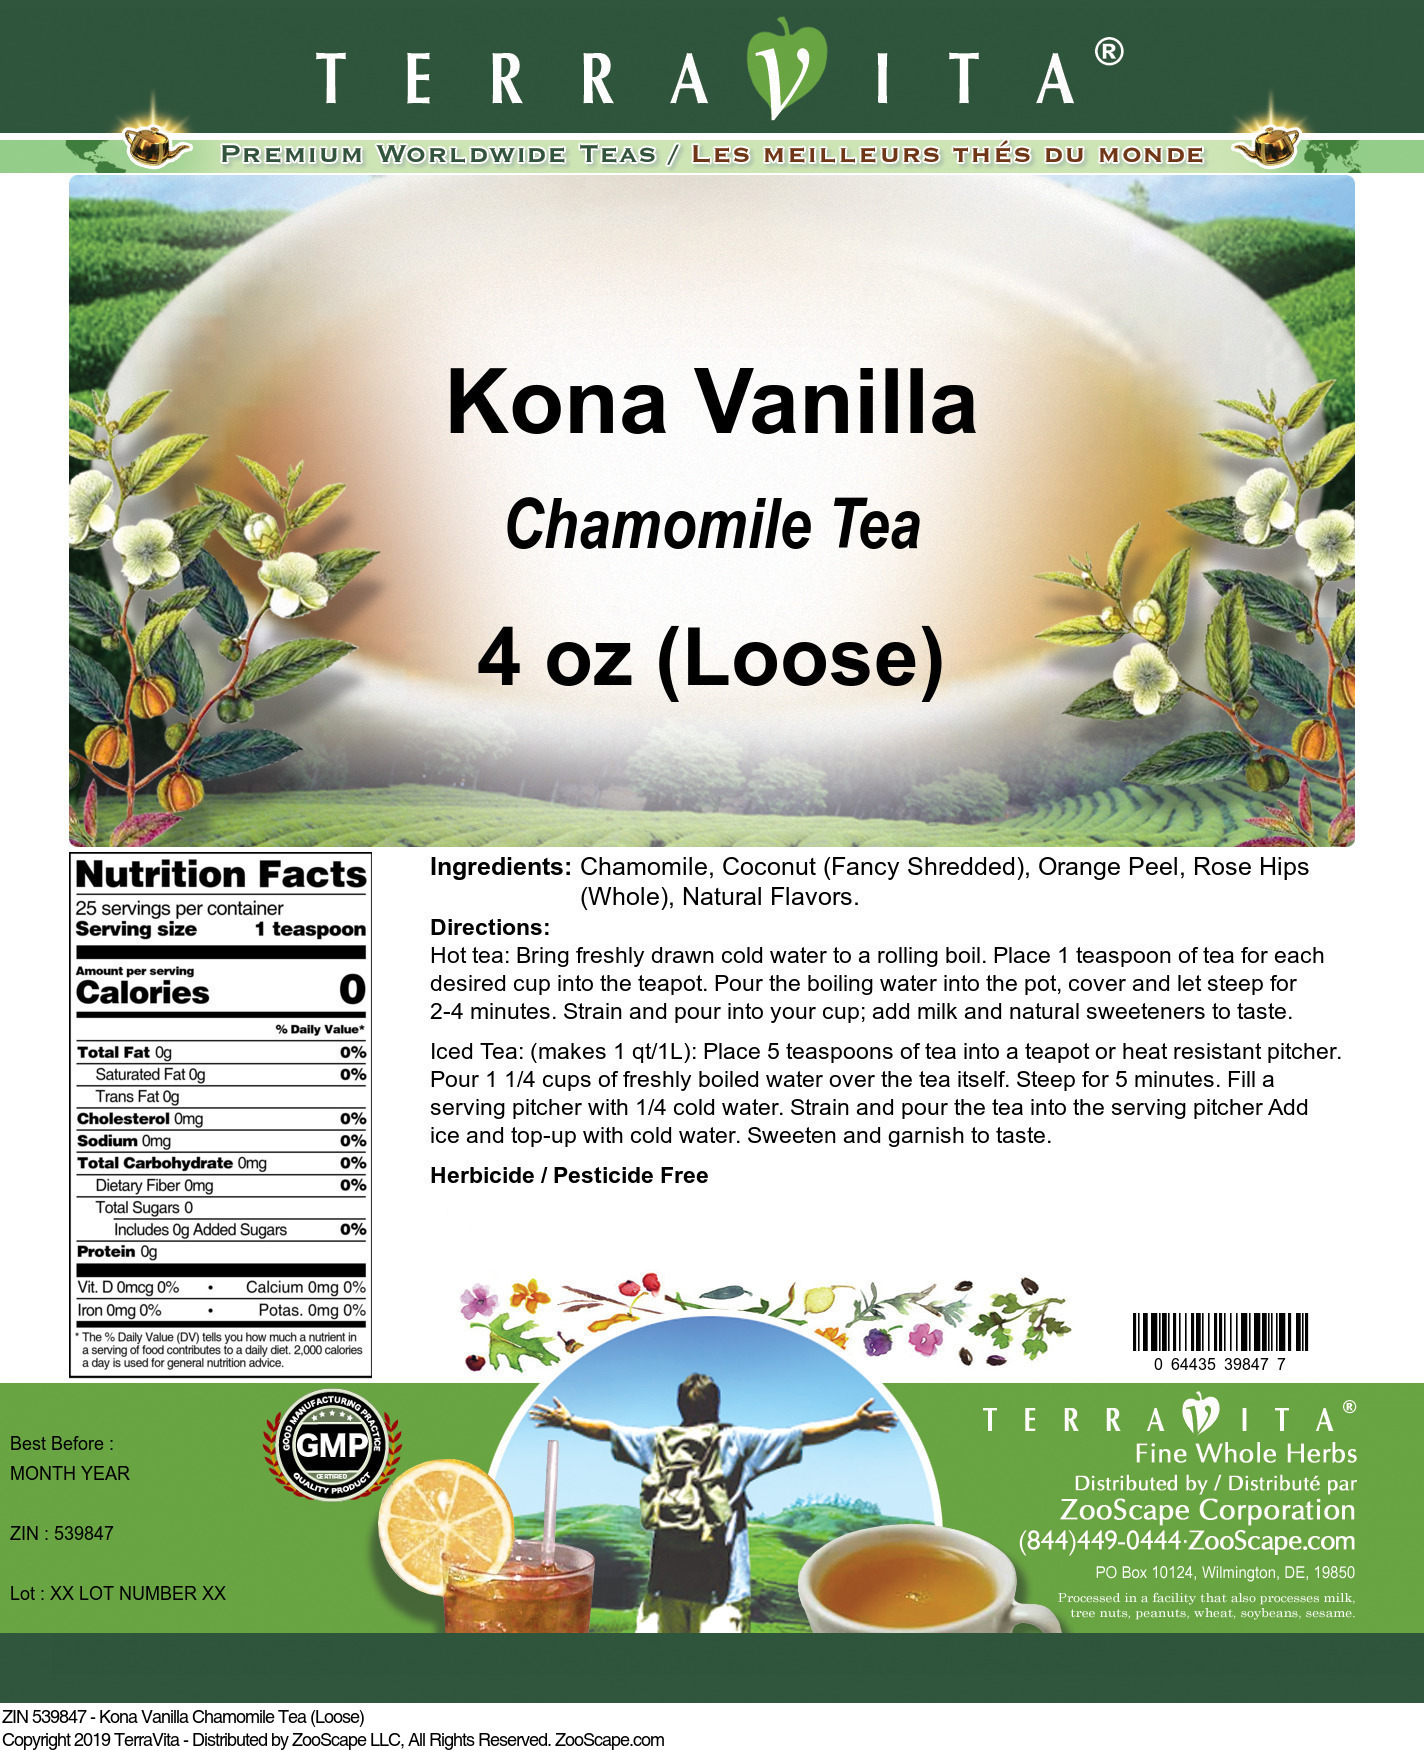 Kona Vanilla Chamomile Tea (Loose) - Label